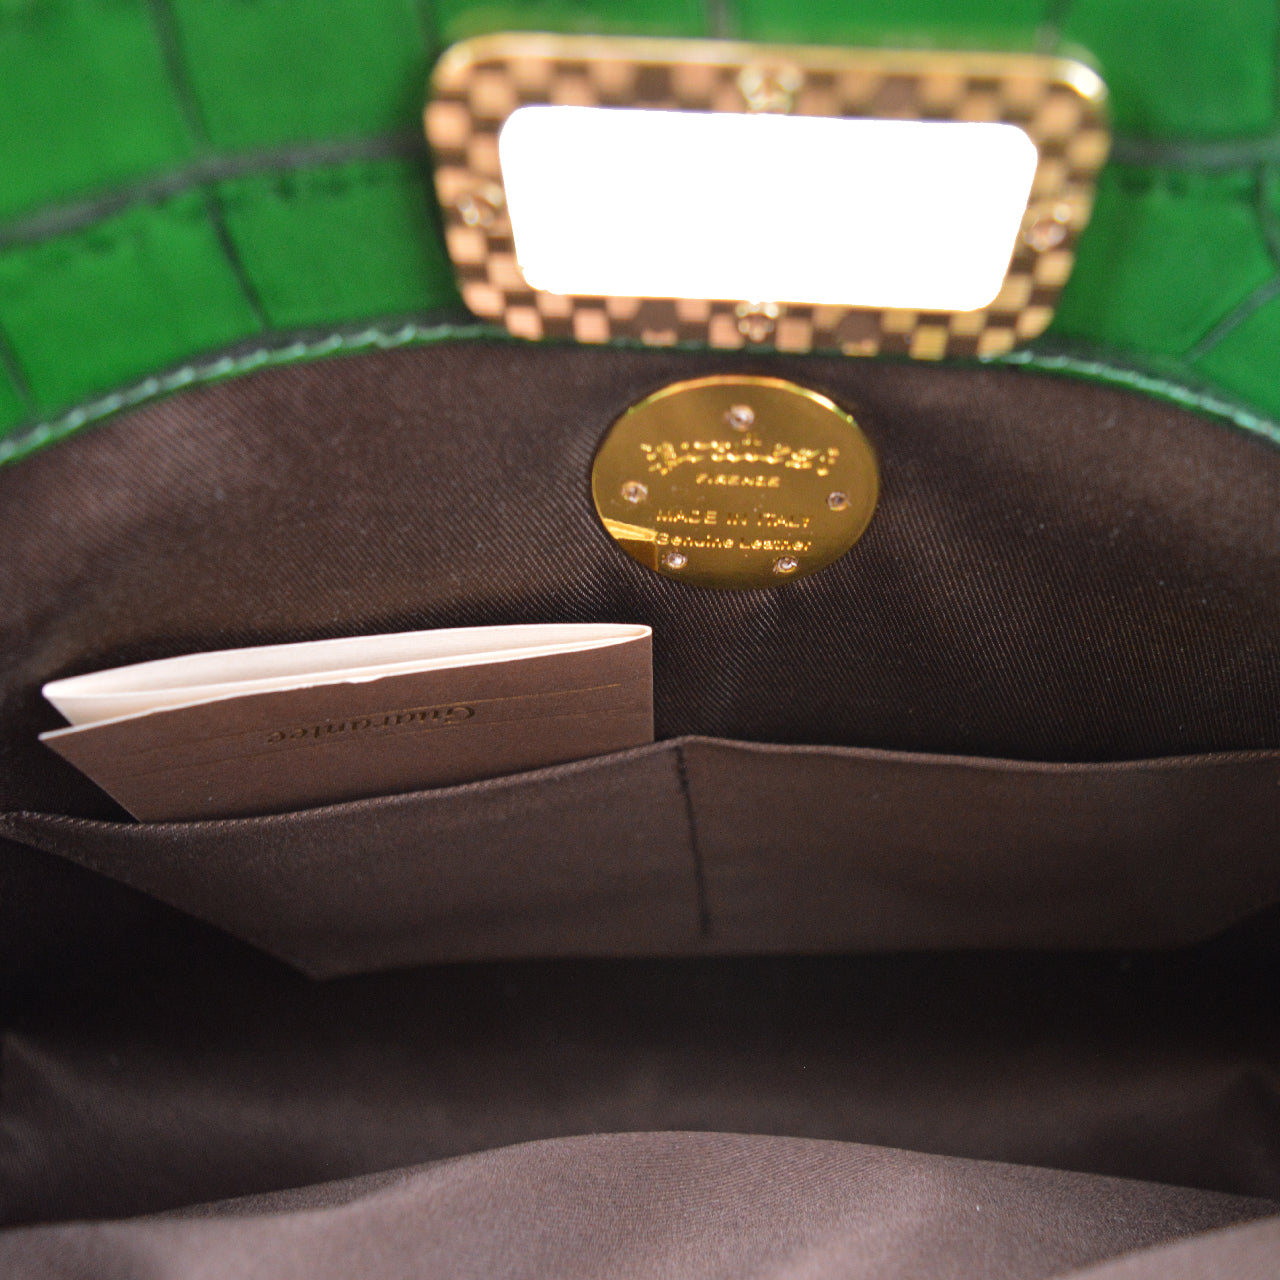 Pratesi Sarteano Shoulder Bag in genuine Italian leather K291 - Vegetable Tanned Italian Leather Chianti